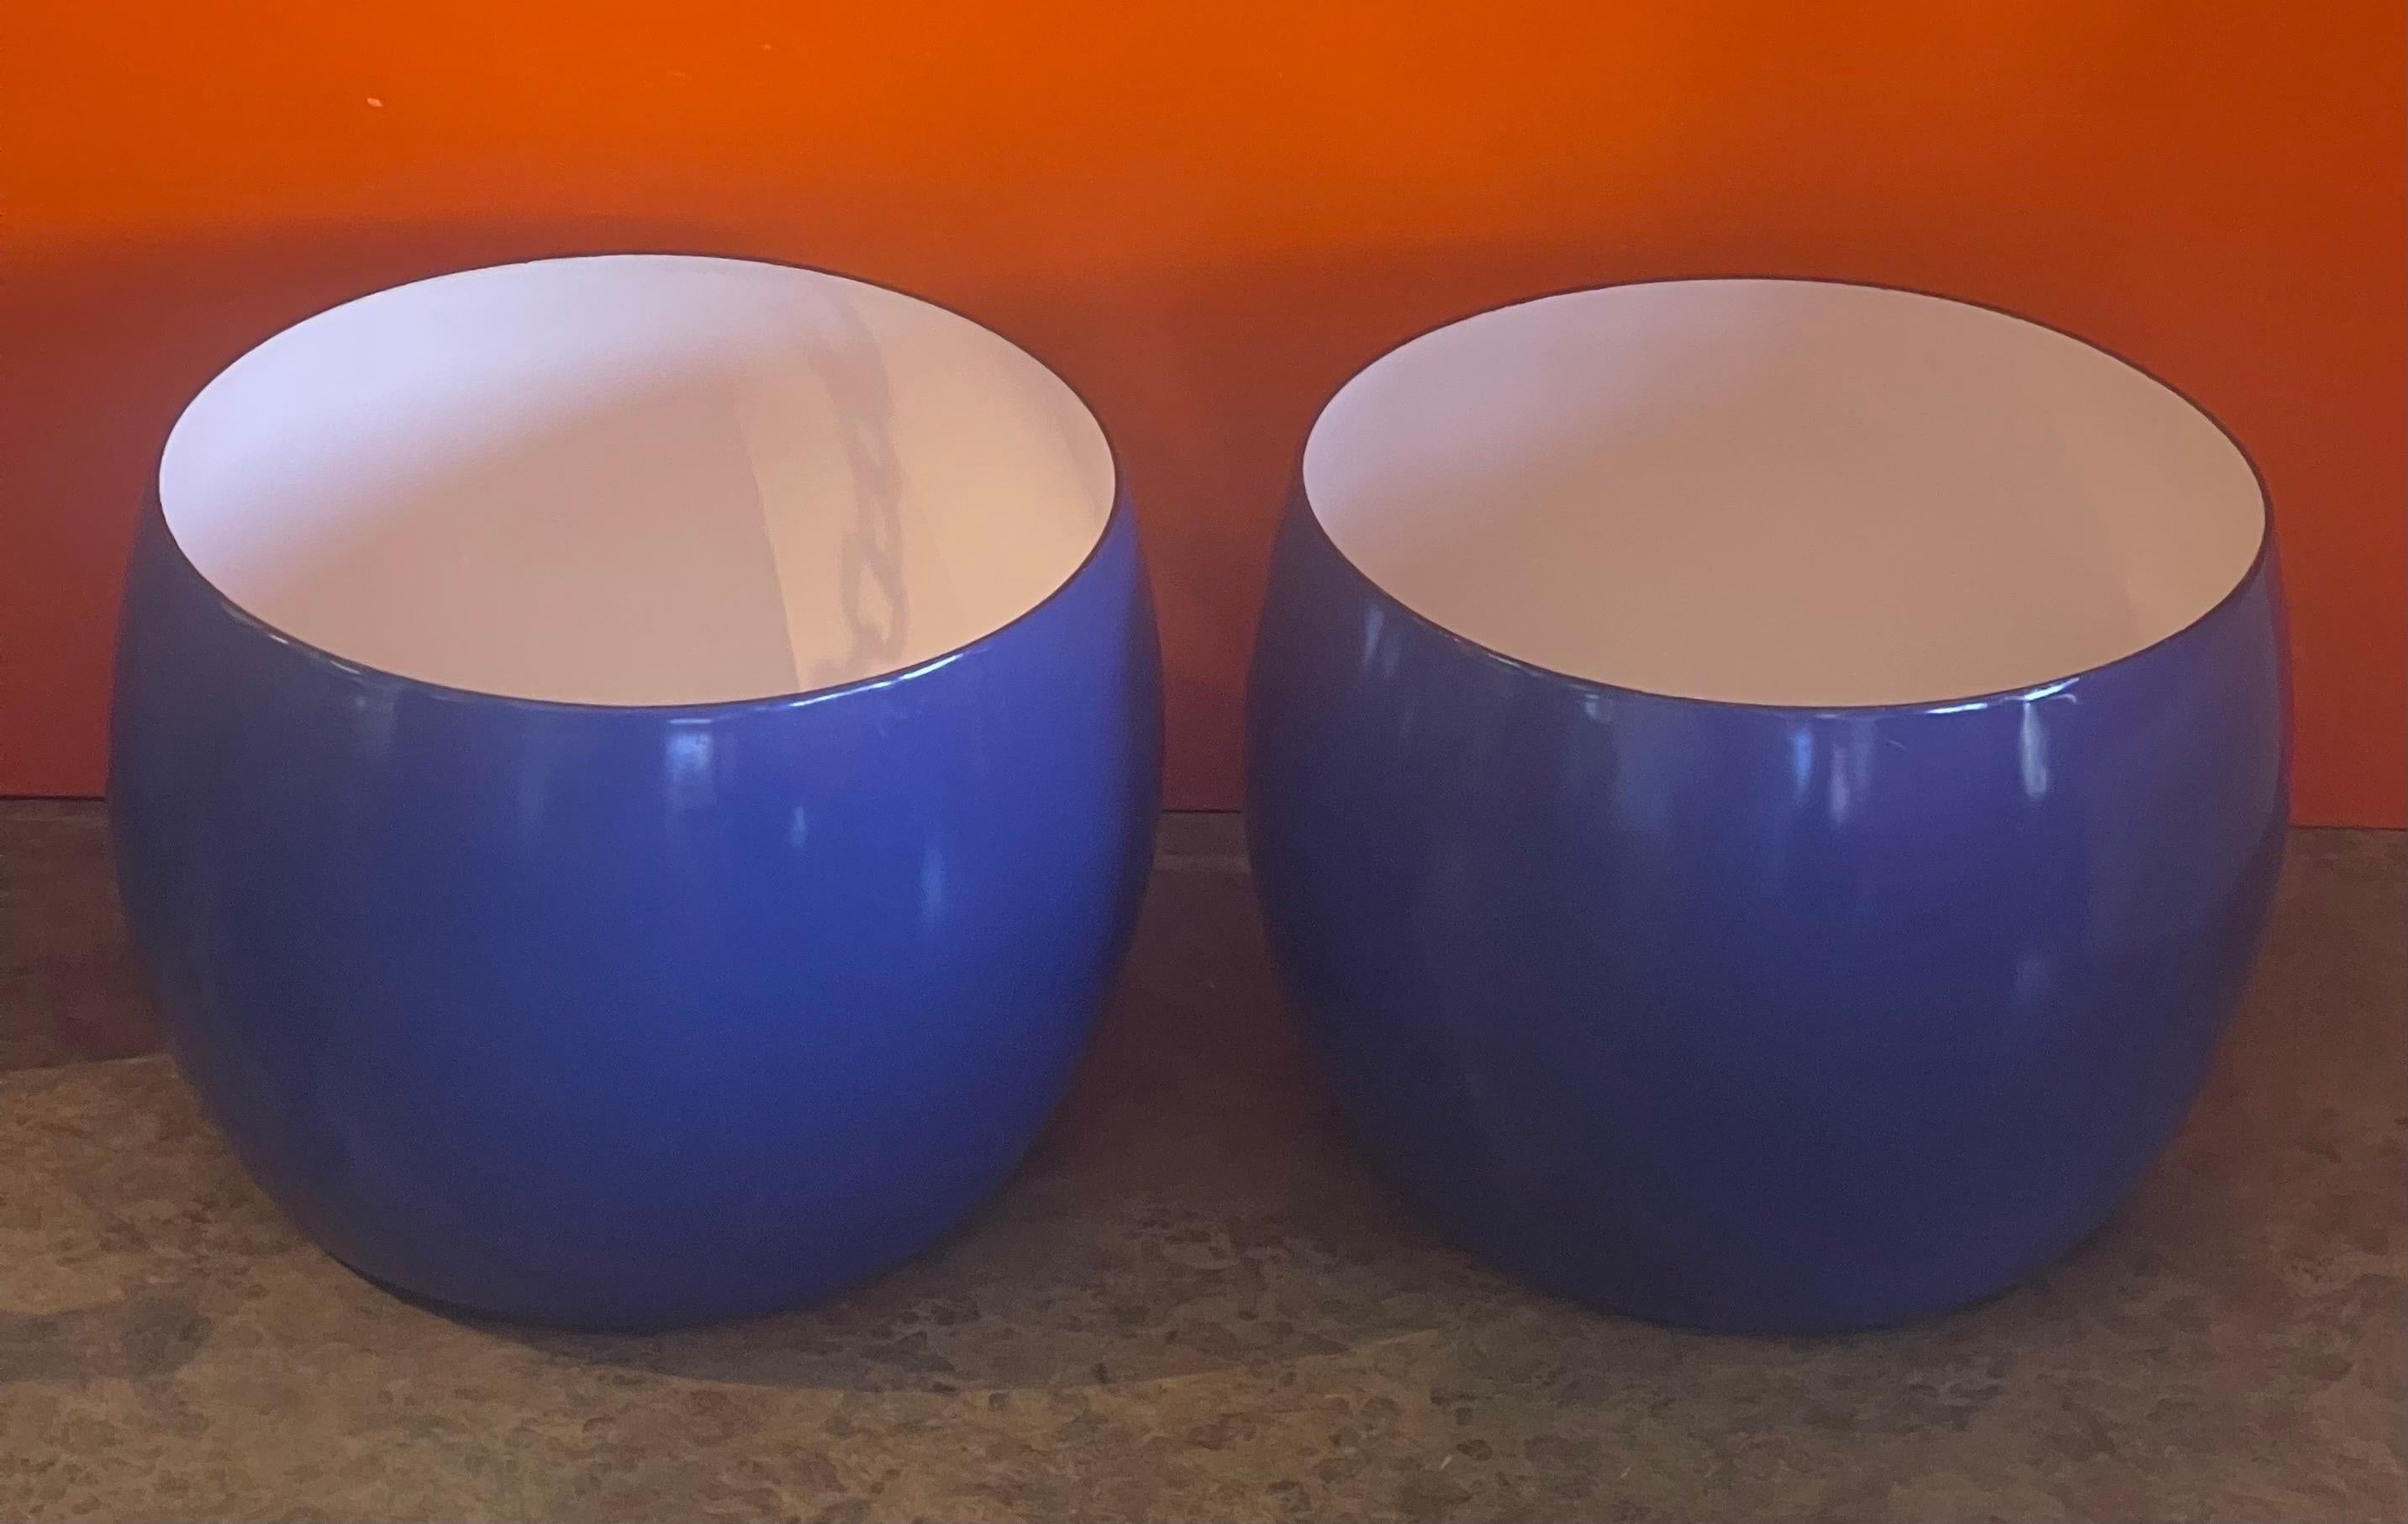 Pair of Danish Modern Blue & White Enamel Bowl by Jens Quistgaard for Dansk For Sale 7